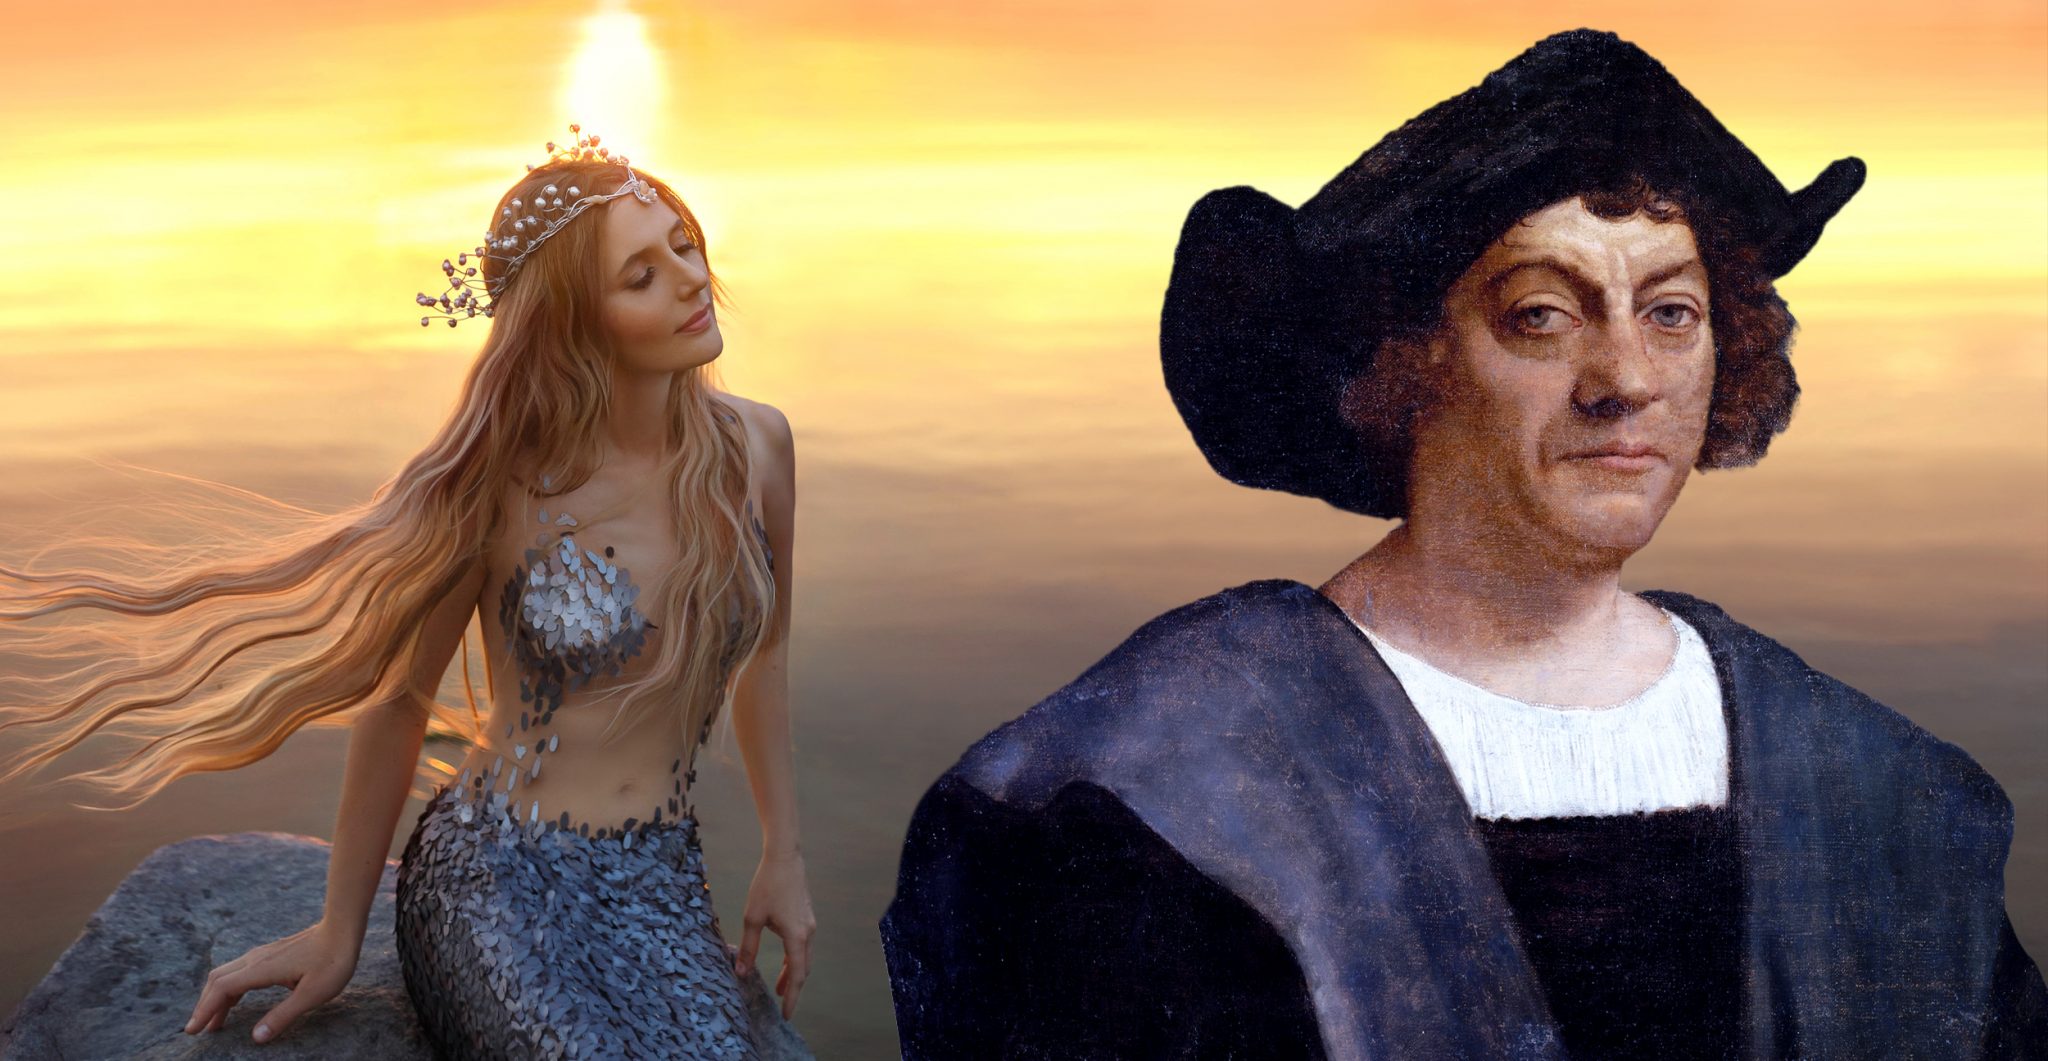 The mermaid and Columbus